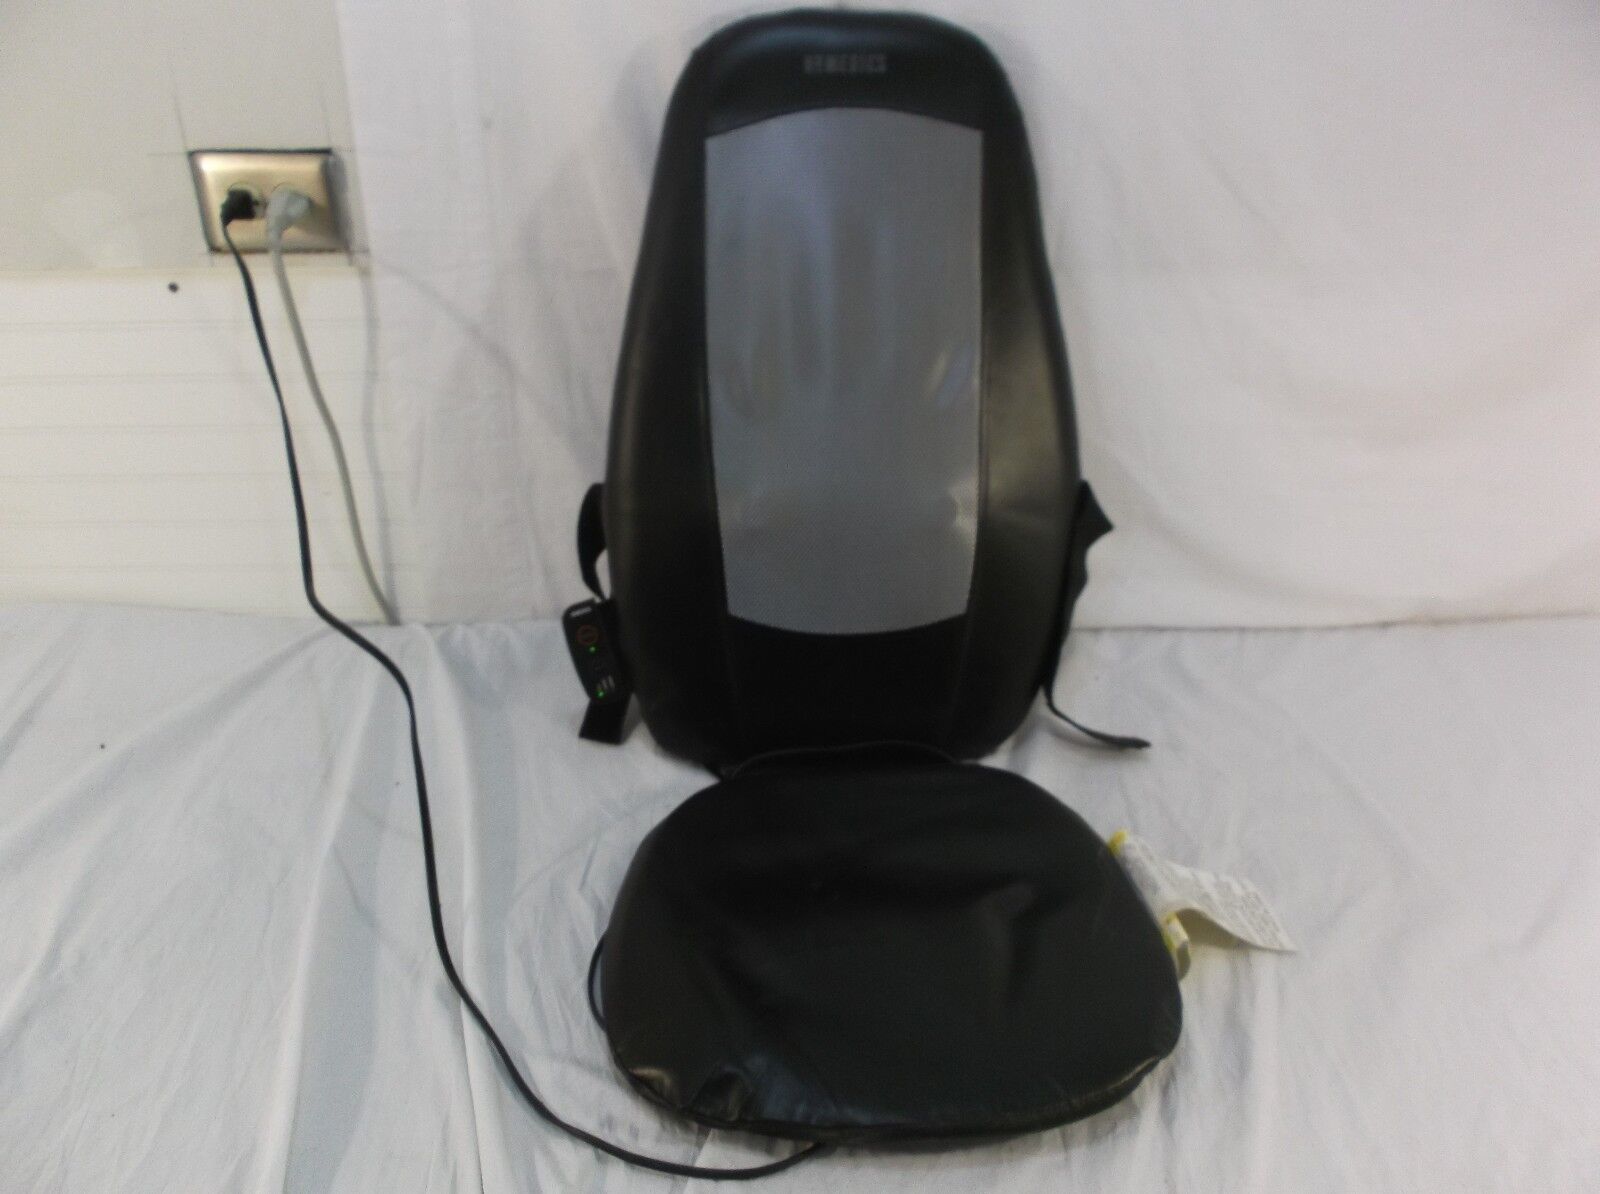 Primary image for Shiatsu Homedics Lumbar Chairs Massage Cushion  Model MCS-100 Black & Silver